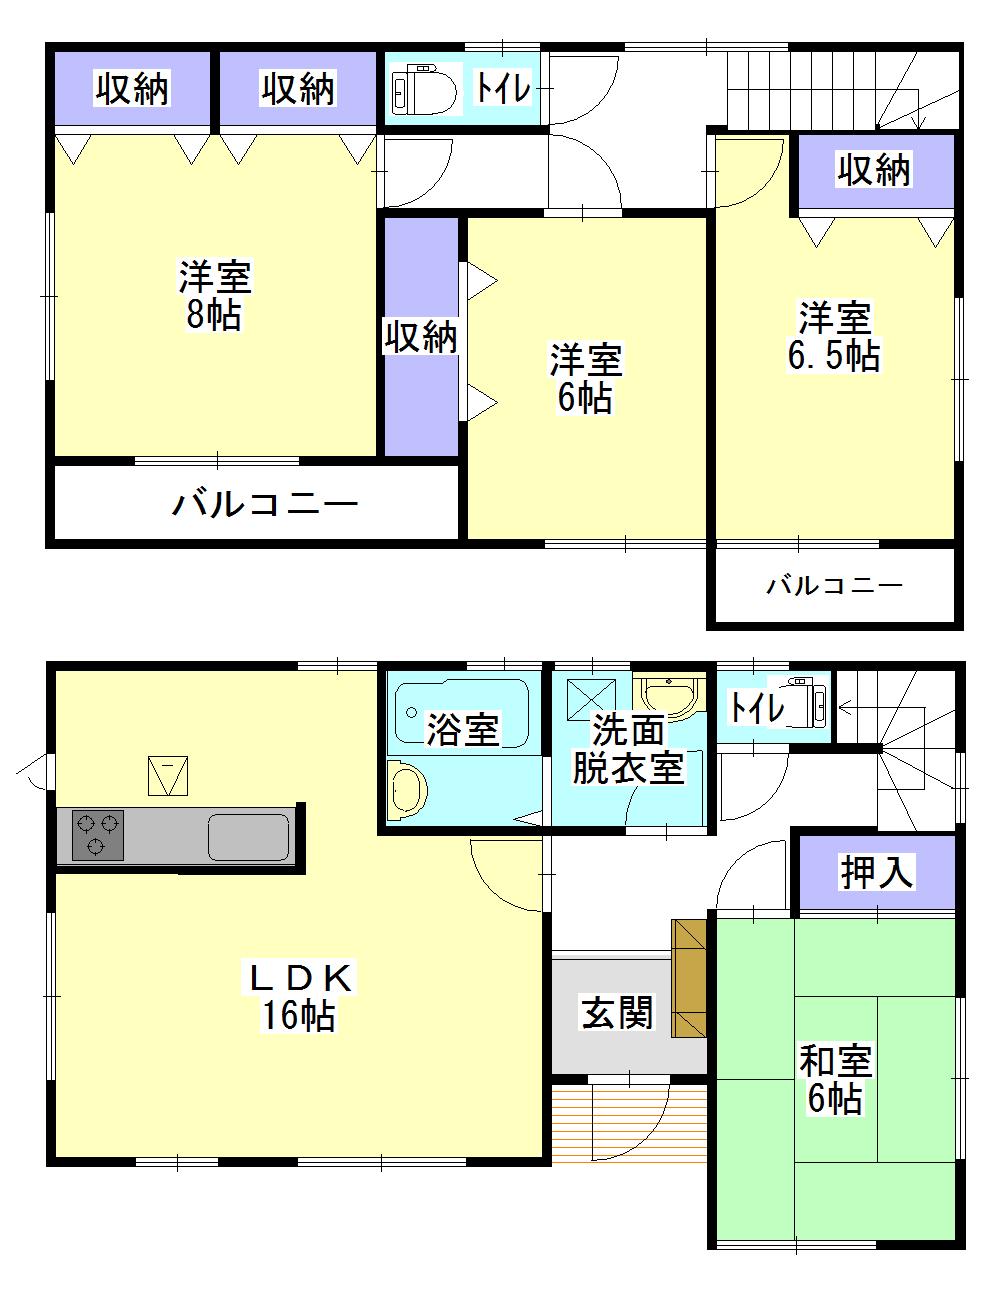 Floor plan. 32,800,000 yen, 4LDK, Land area 165.13 sq m , Building area 105.99 sq m